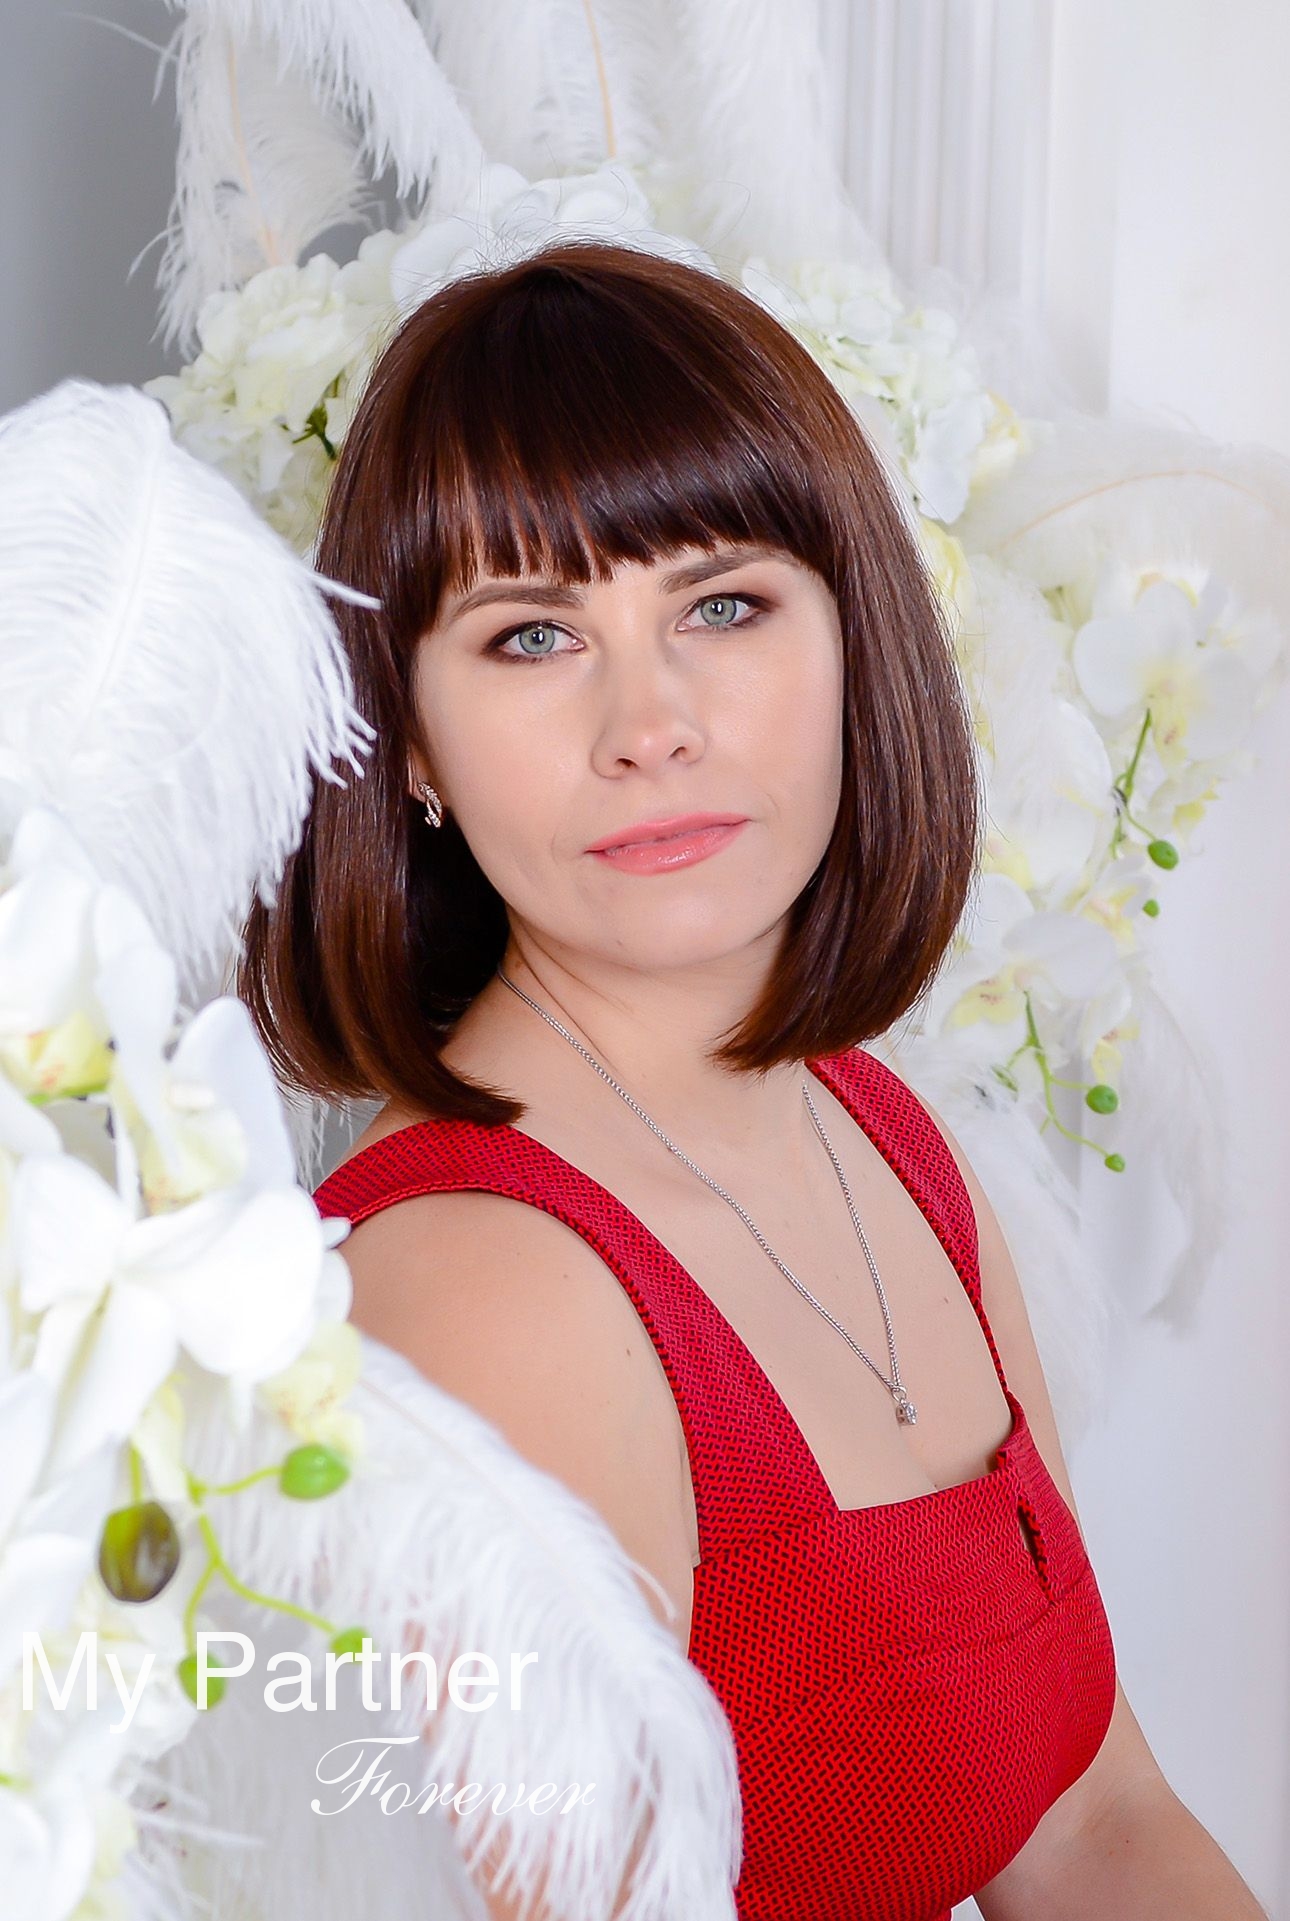 Dating Site to Meet Single Ukrainian Lady Nadezhda from Zaporozhye, Ukraine